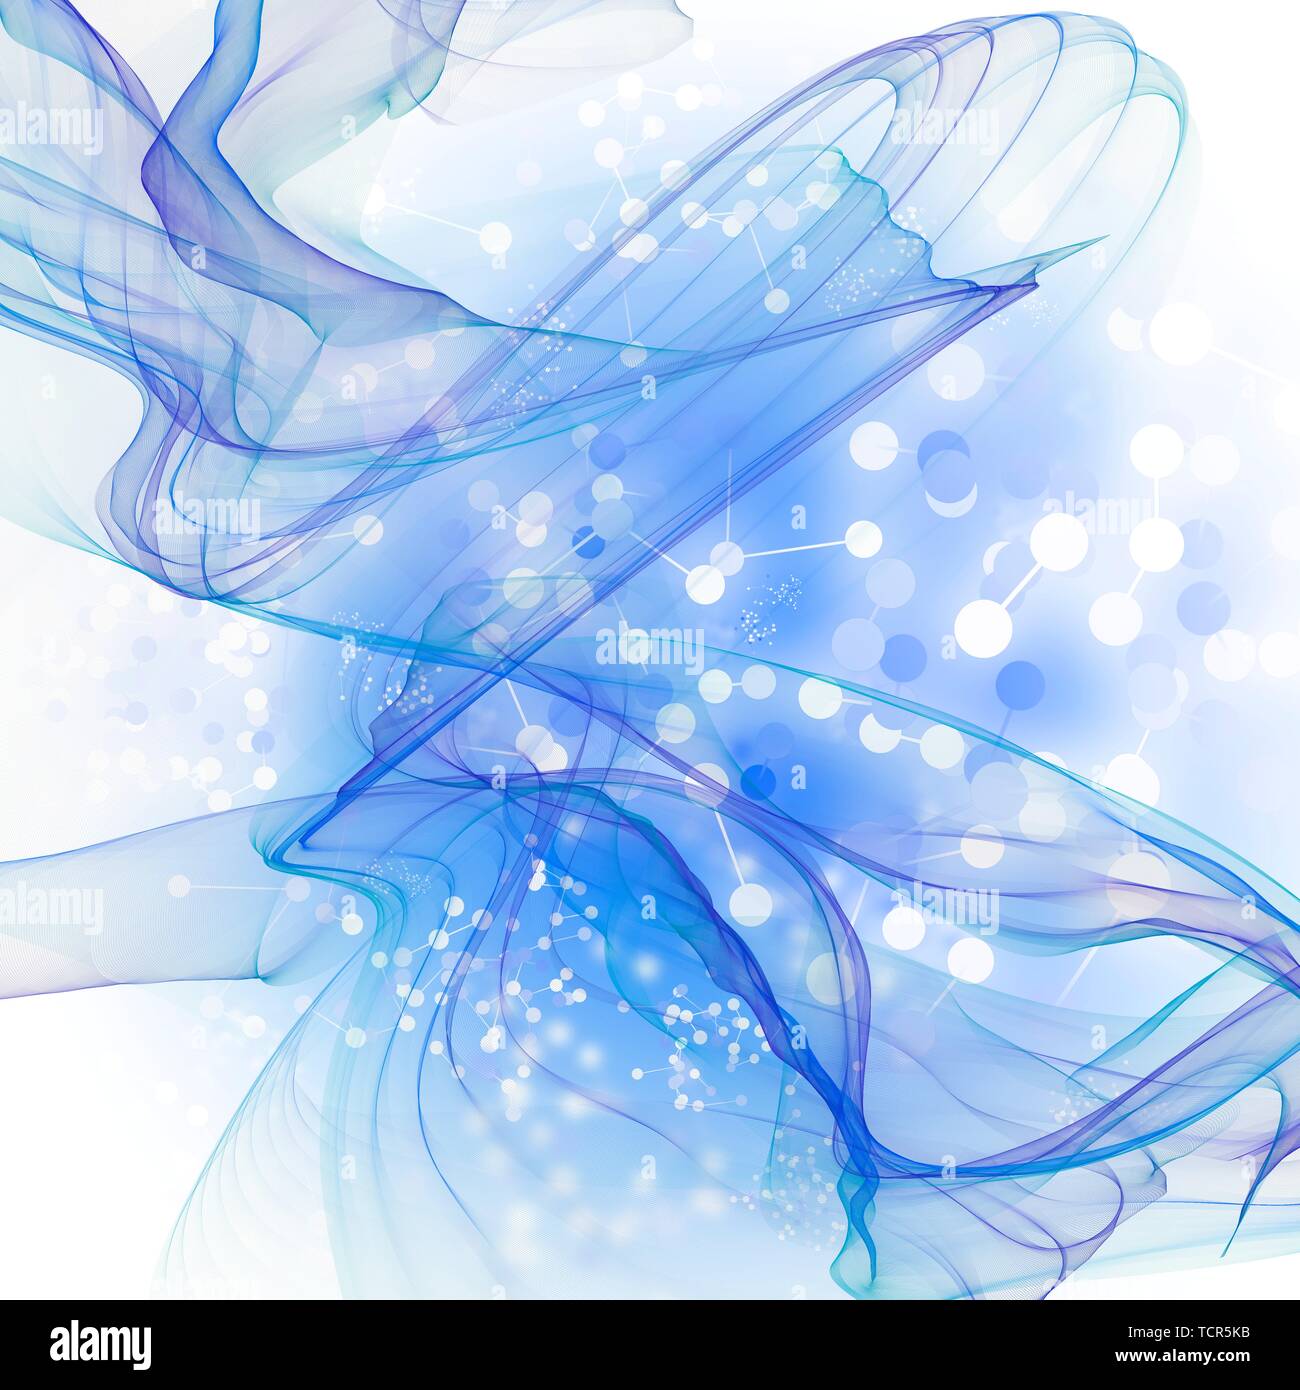 Blue swirls against white, illustration Stock Photo